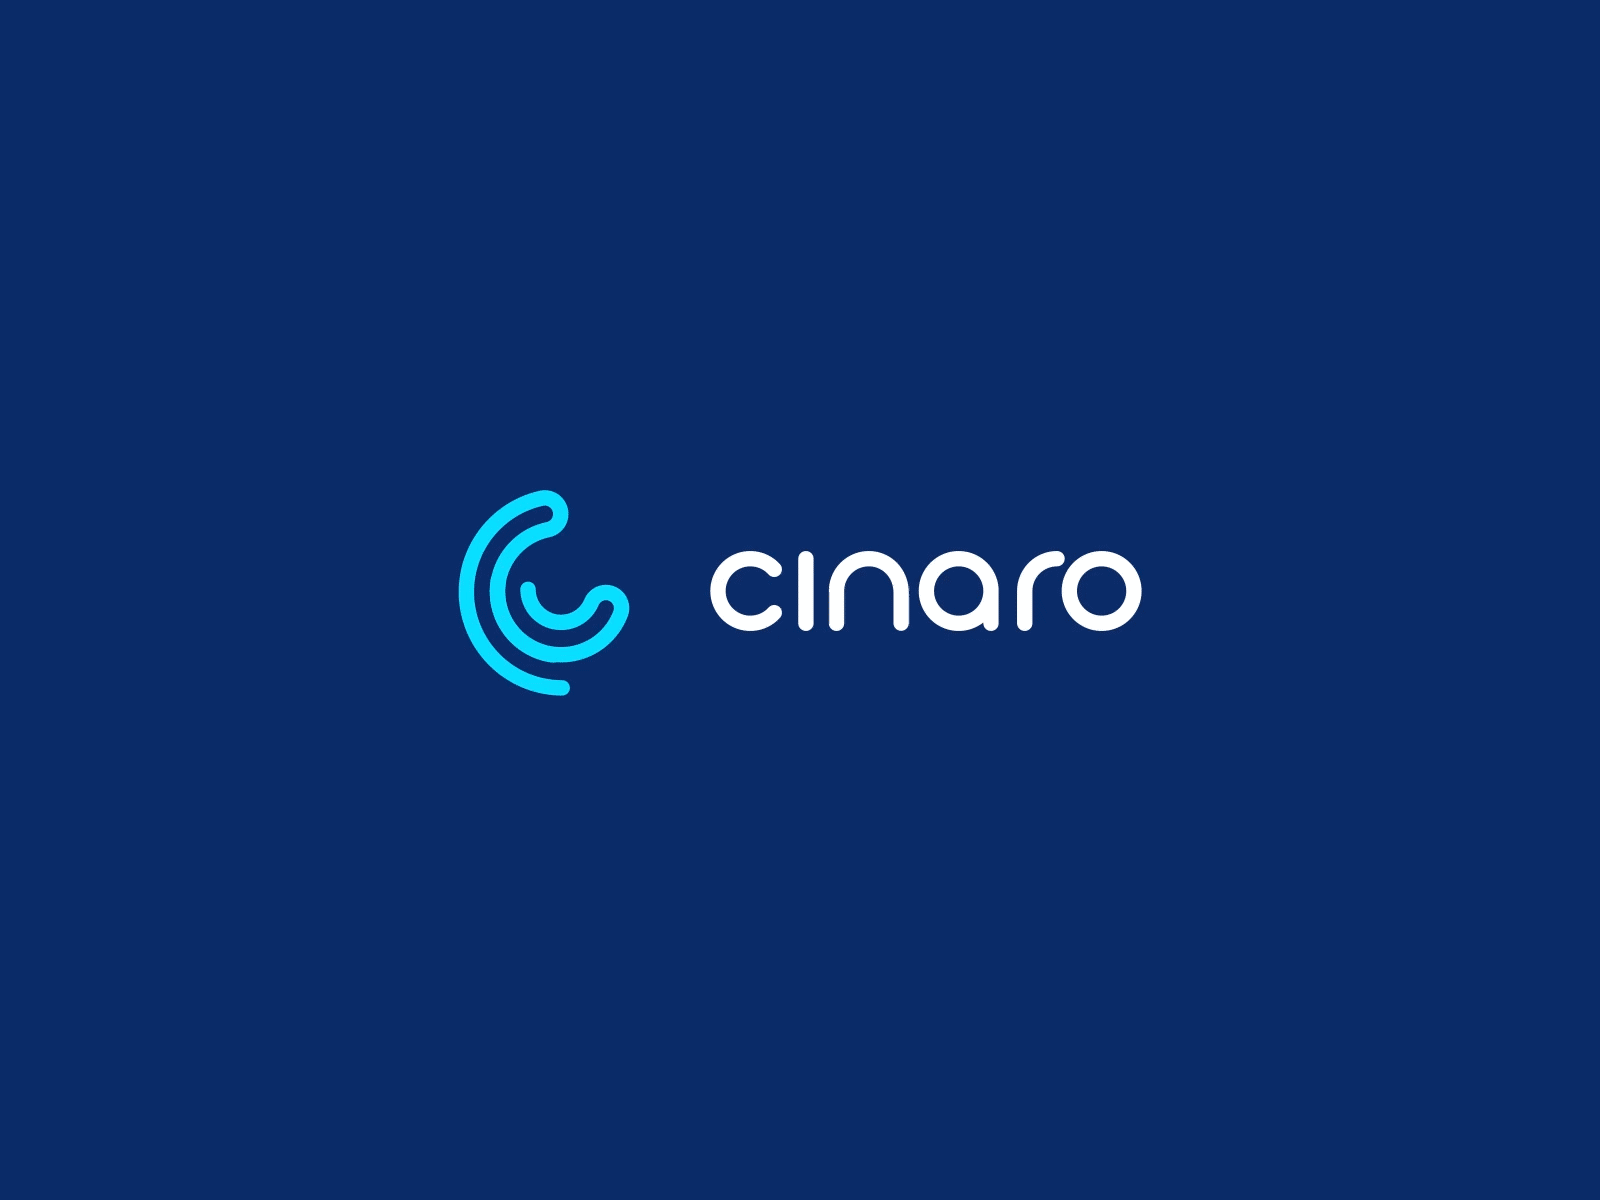 Cinaro Logo Animation